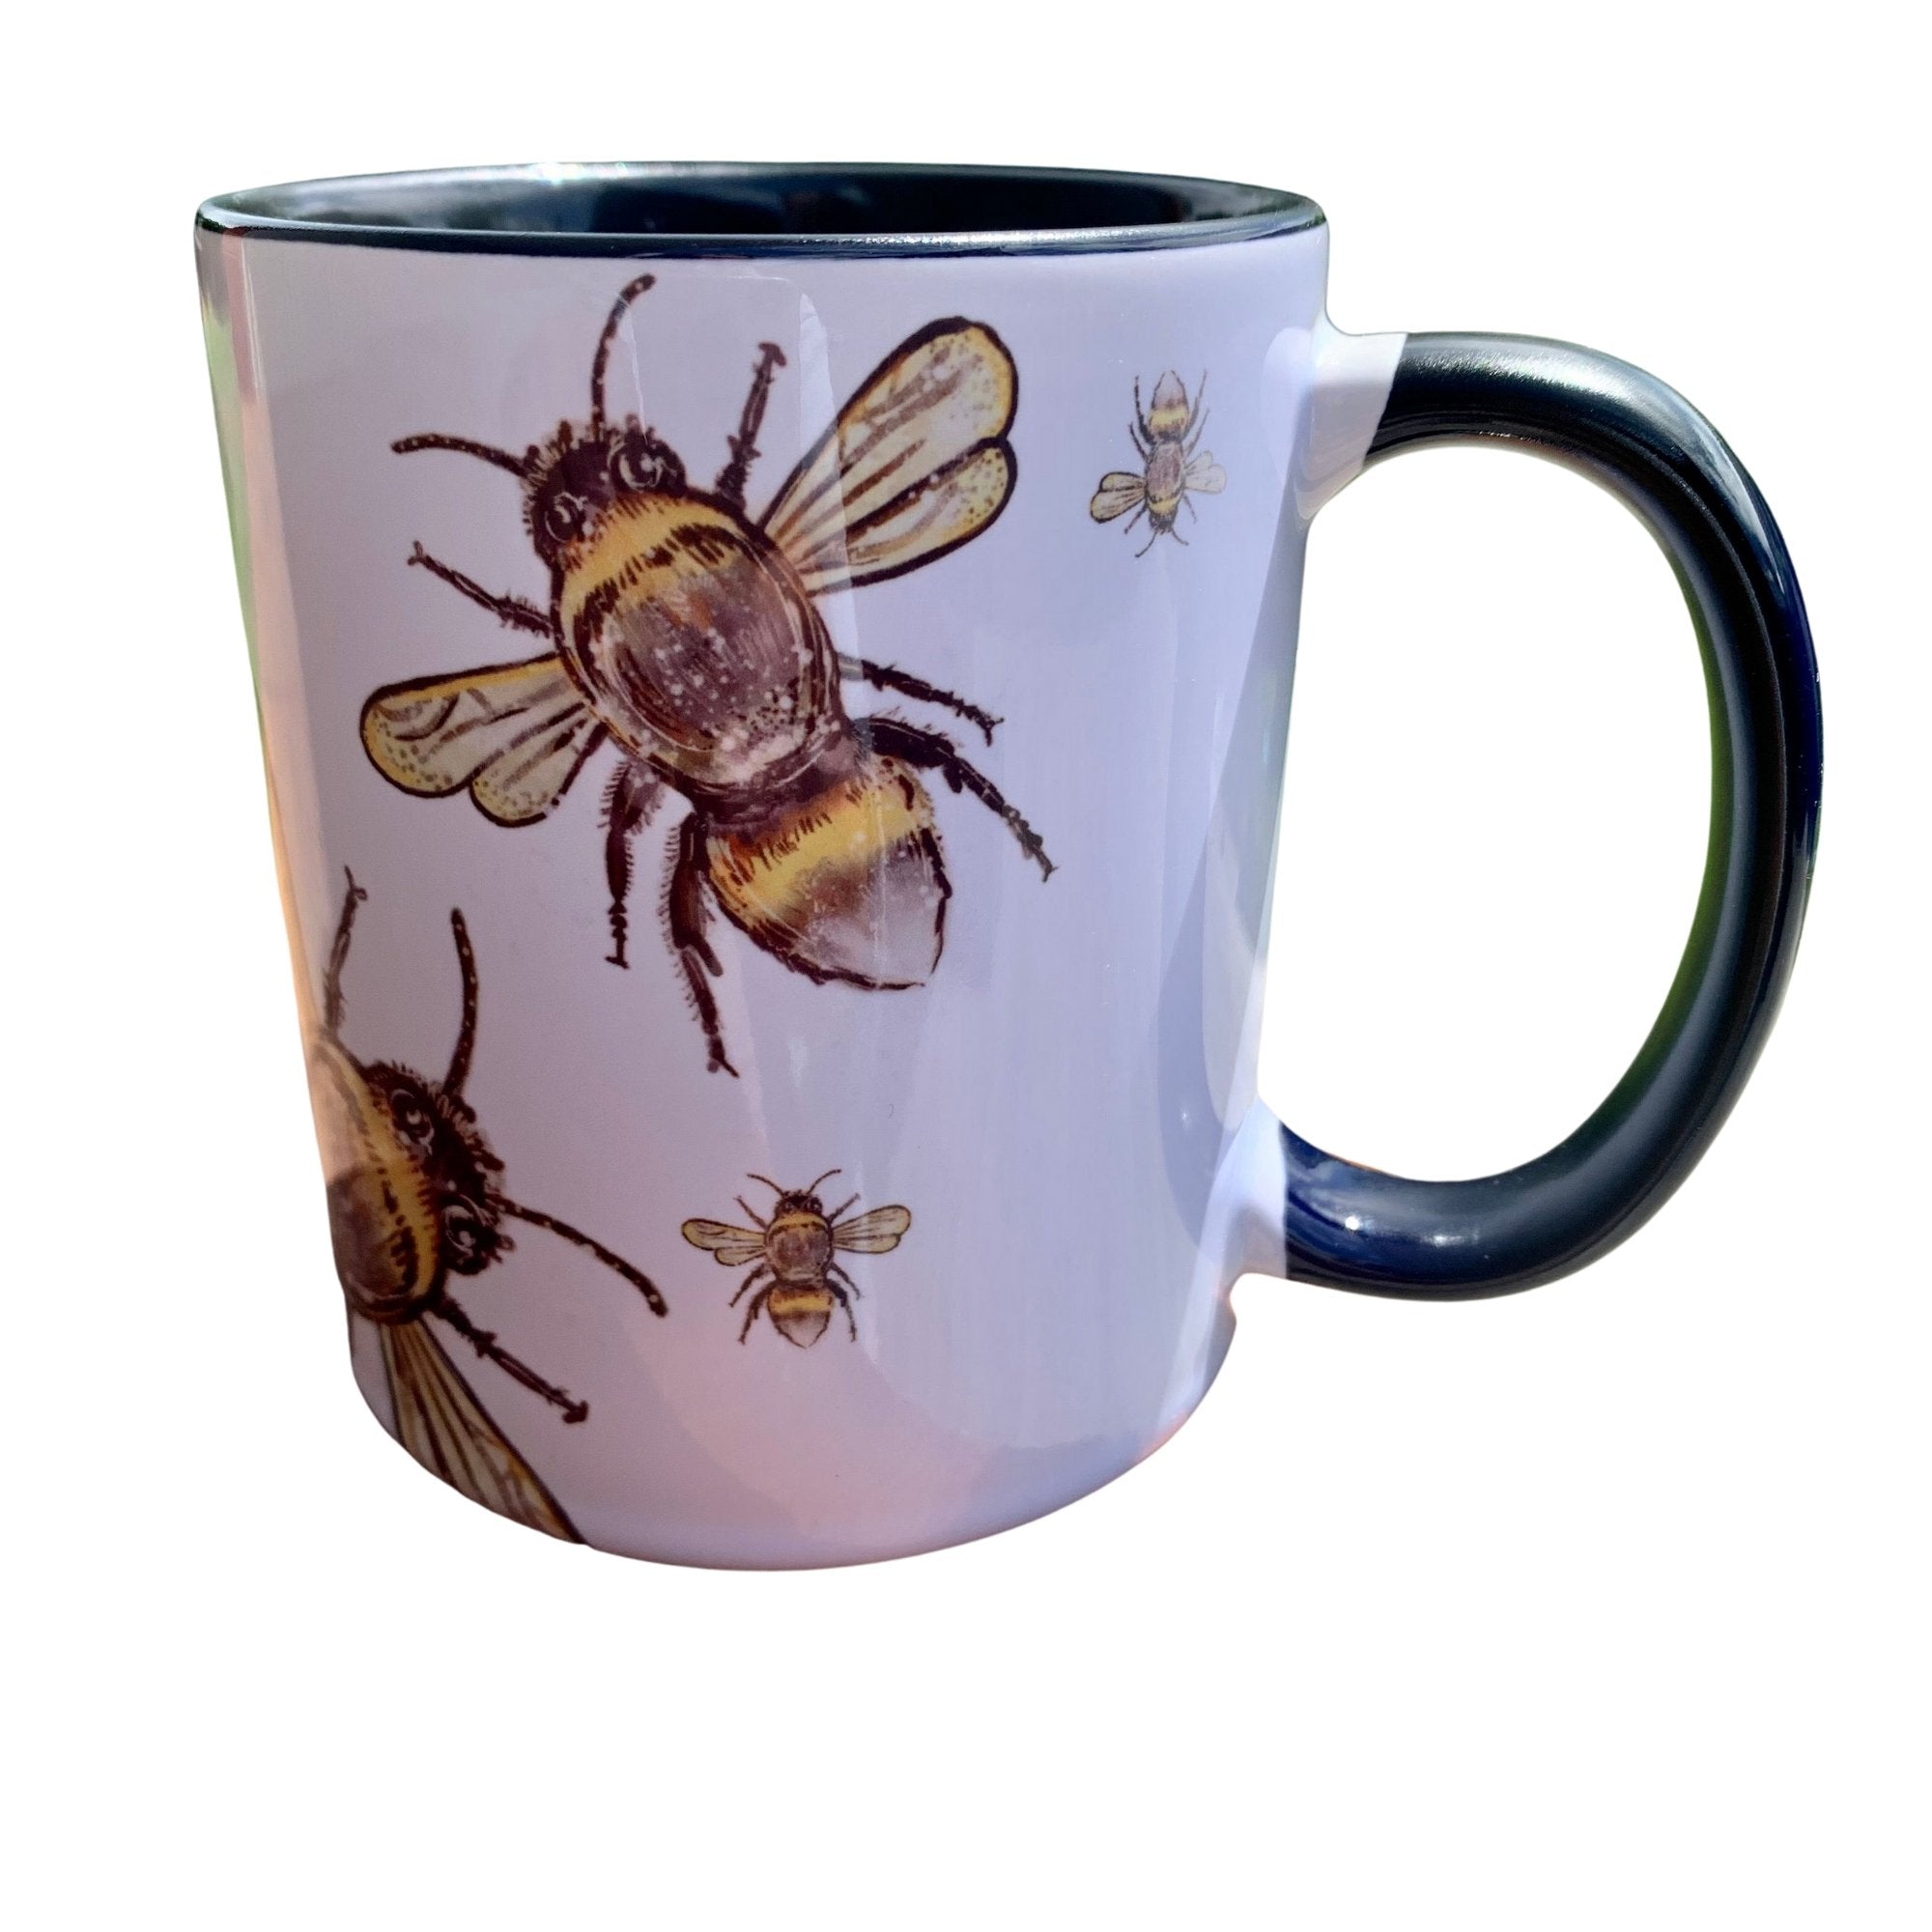 Bee mug by Sarah McAlpine Art - Beautiful Gifts - Packaged with Love